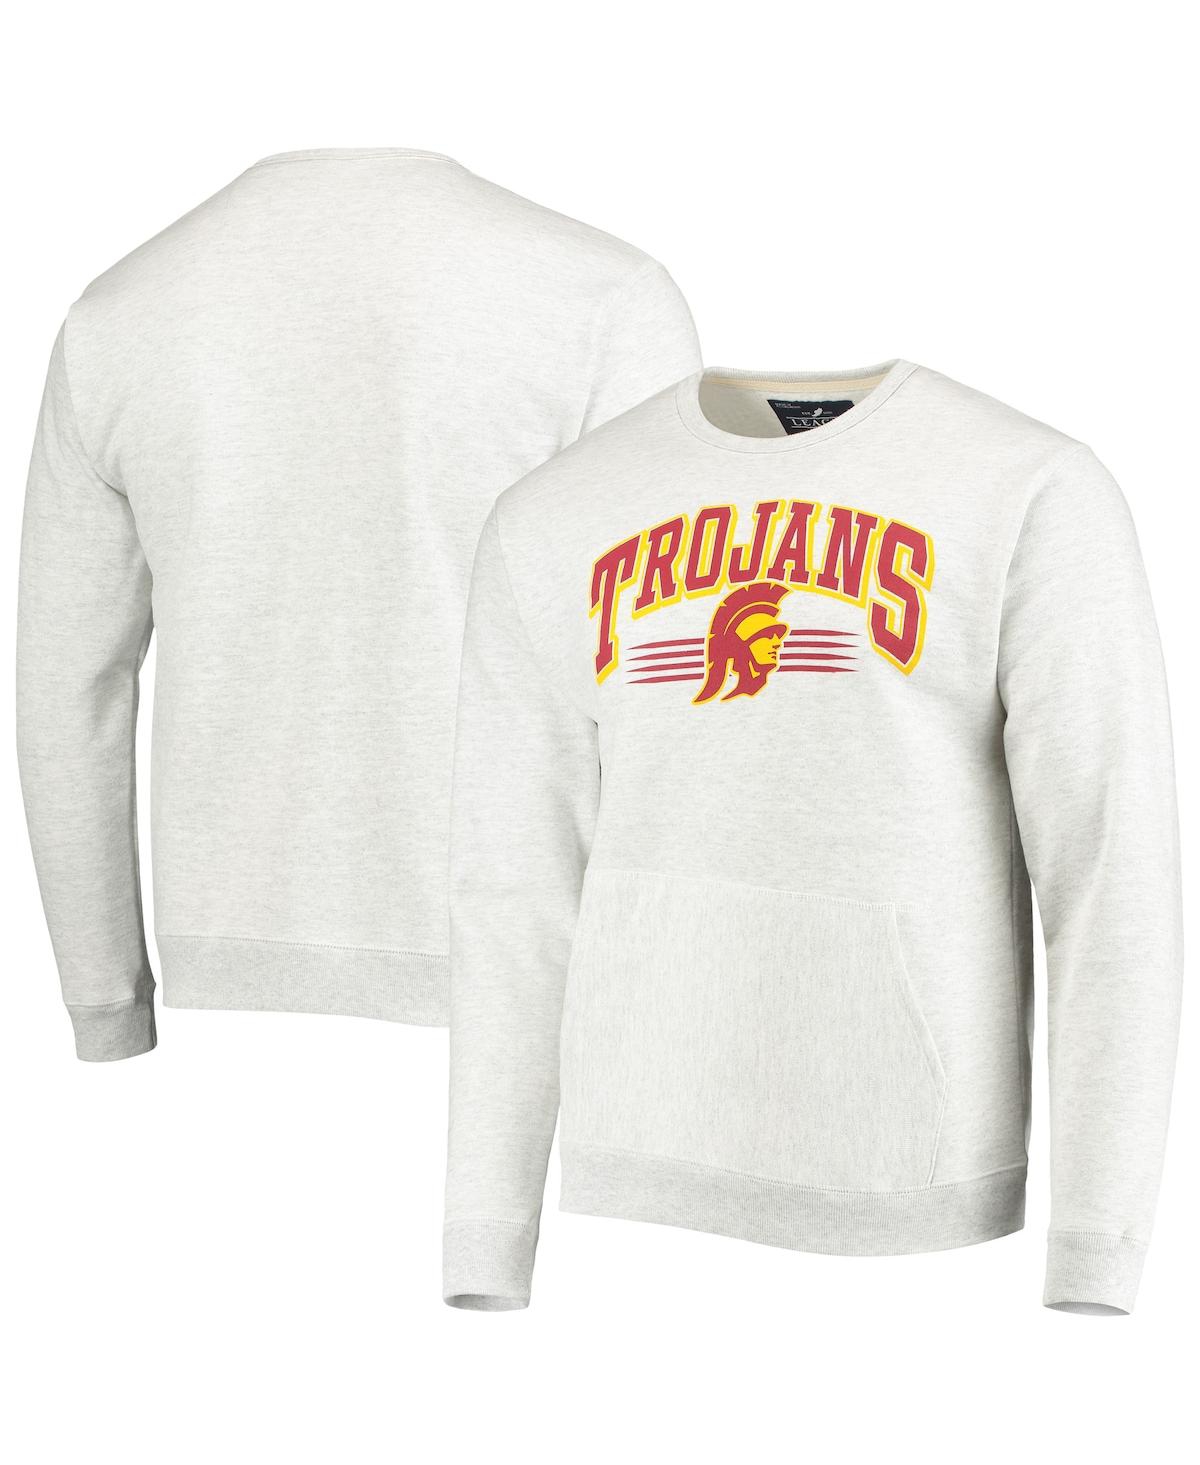 League Collegiate Wear Men's  Heathered Gray Usc Trojans Upperclassman Pocket Pullover Sweatshirt